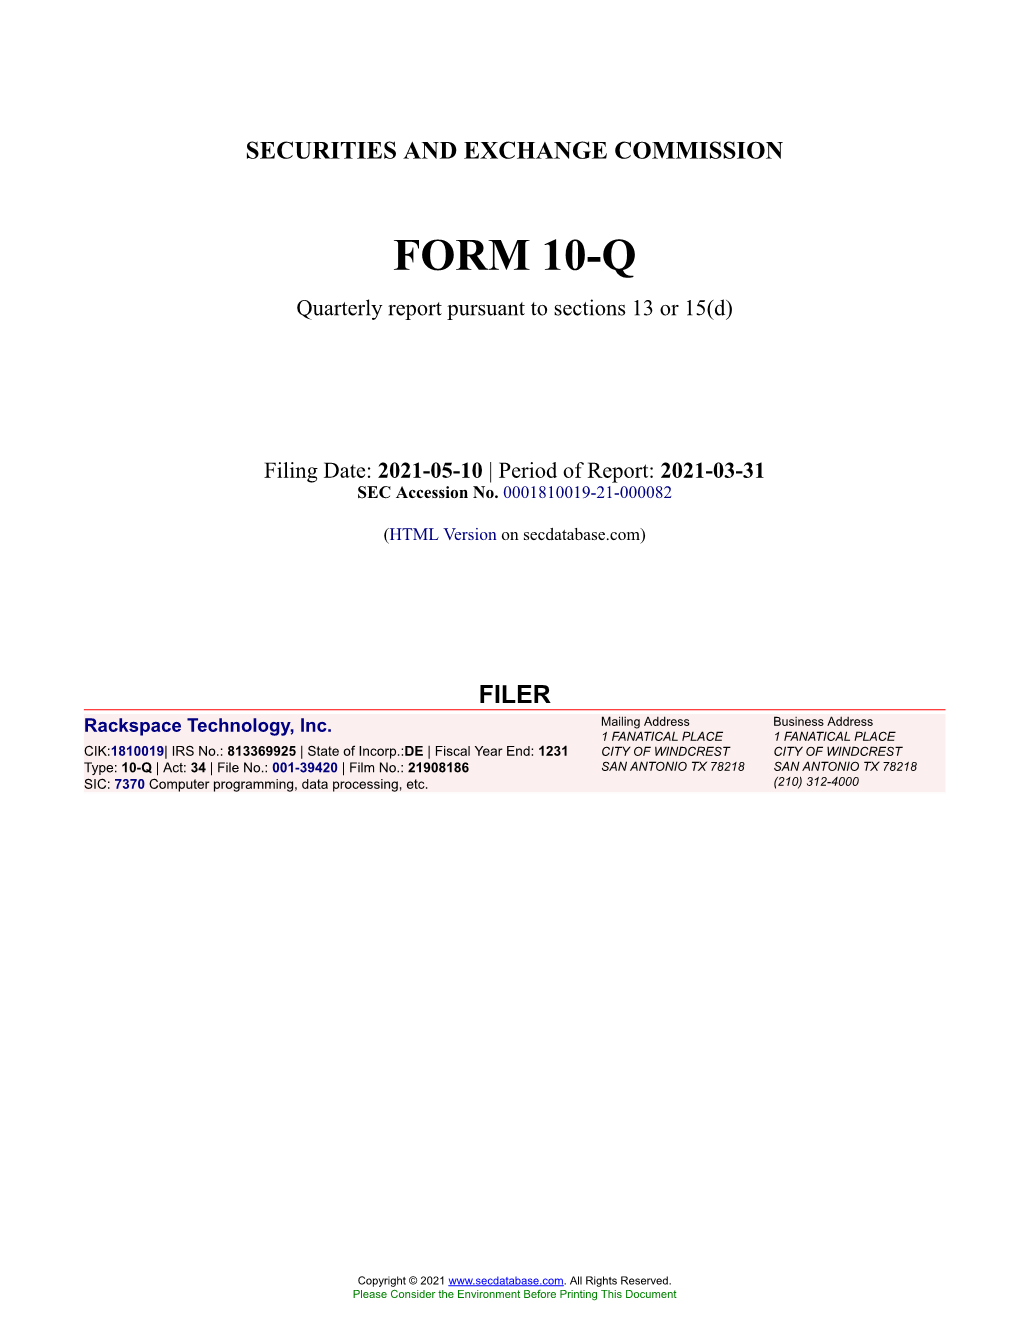 Rackspace Technology, Inc. Form 10-Q Quarterly